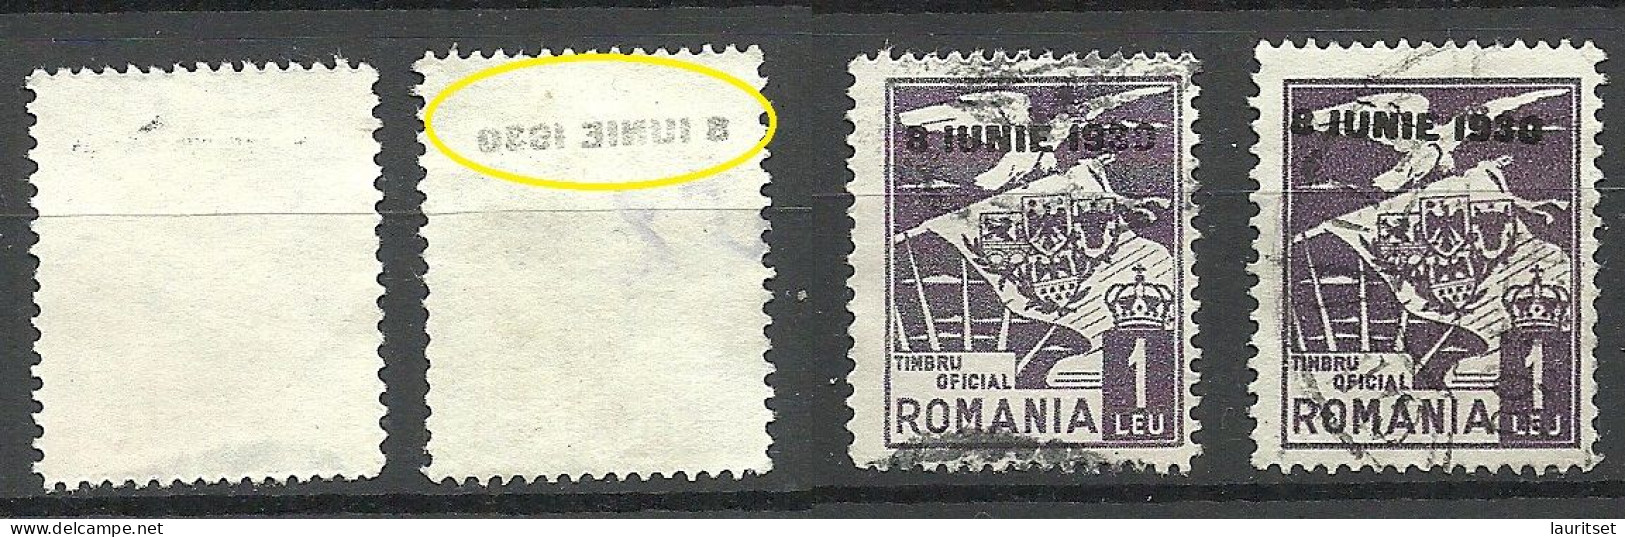 ROMANIA Rumänien 1930 Dienstmarke Normal + Variety Set Off Of OPT Abklatsch D. Aufdruckes - Service